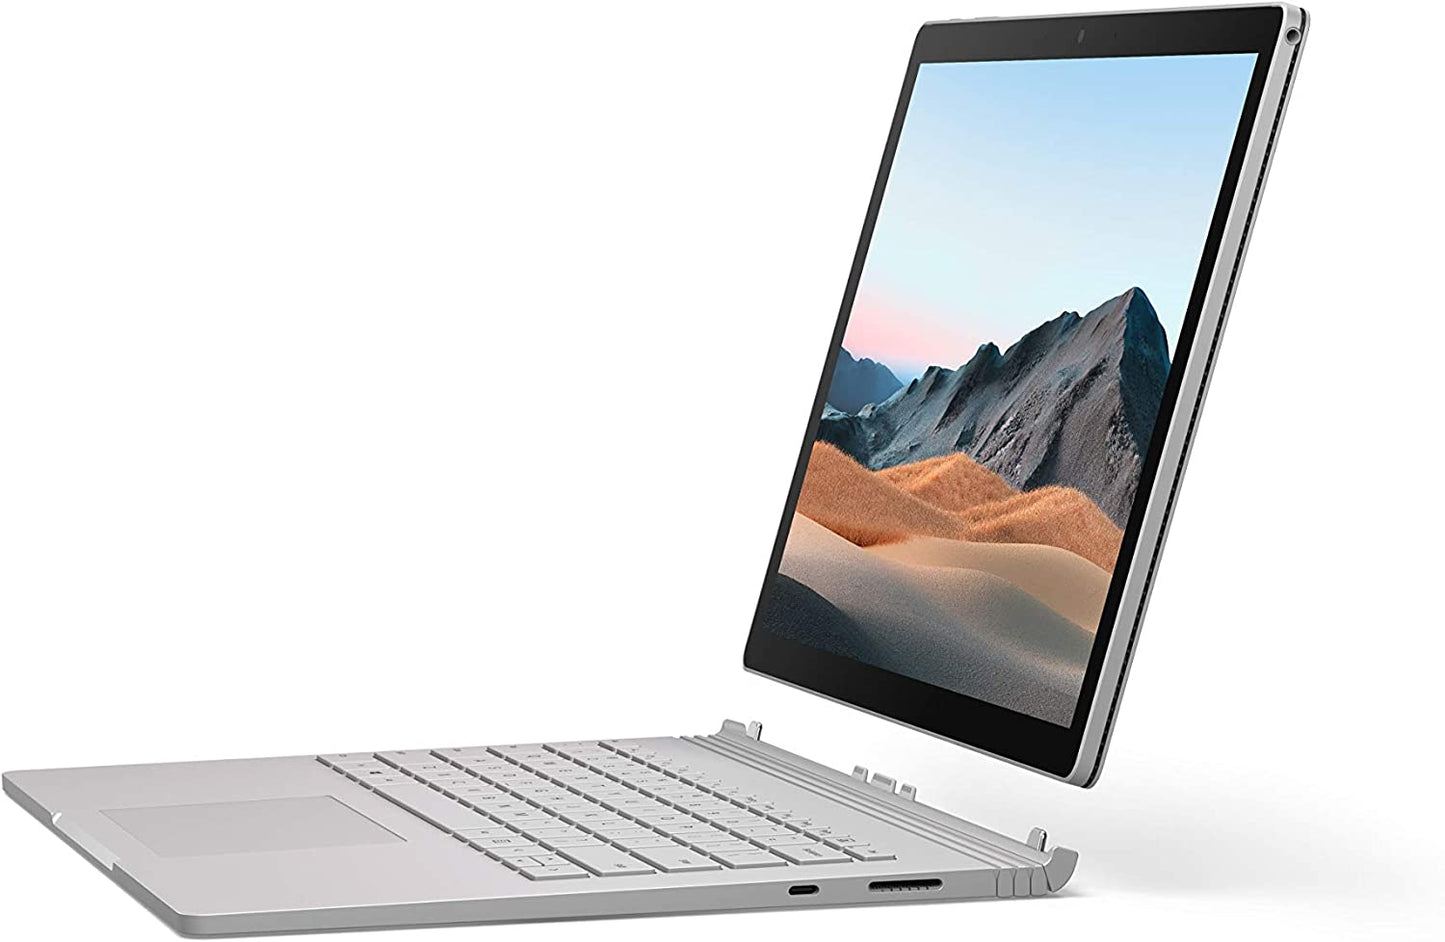 Microsoft Surface Book 3 (2020): 13.5" Touchscreen Laptop/Tablet (Intel Core i5/8GB RAM/256GB RAM/Windows 10 Pro) Platinum - French Keyboard - Boîte ouverte